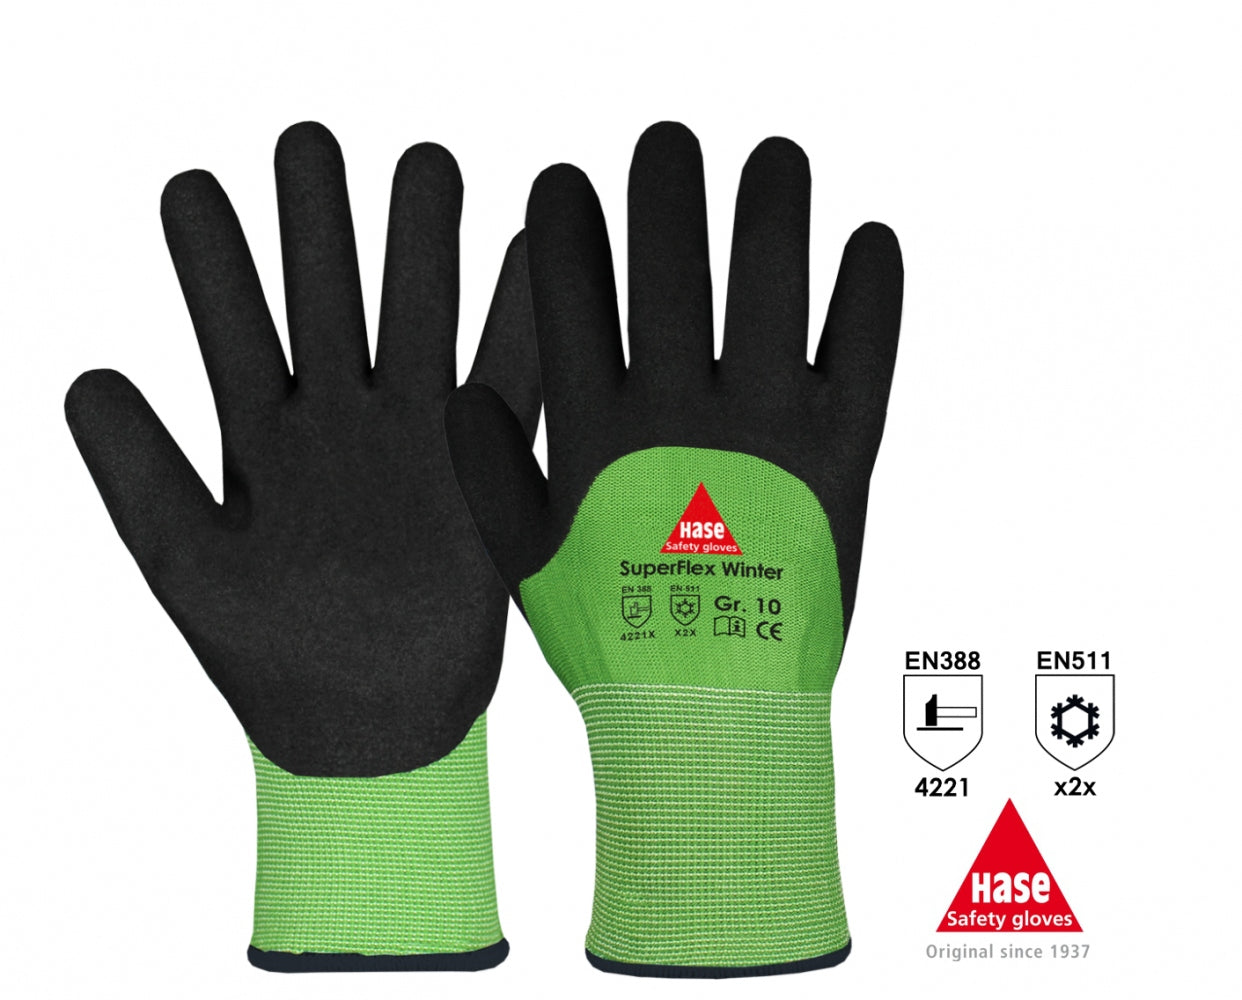 SuperFlex Winter Gloves